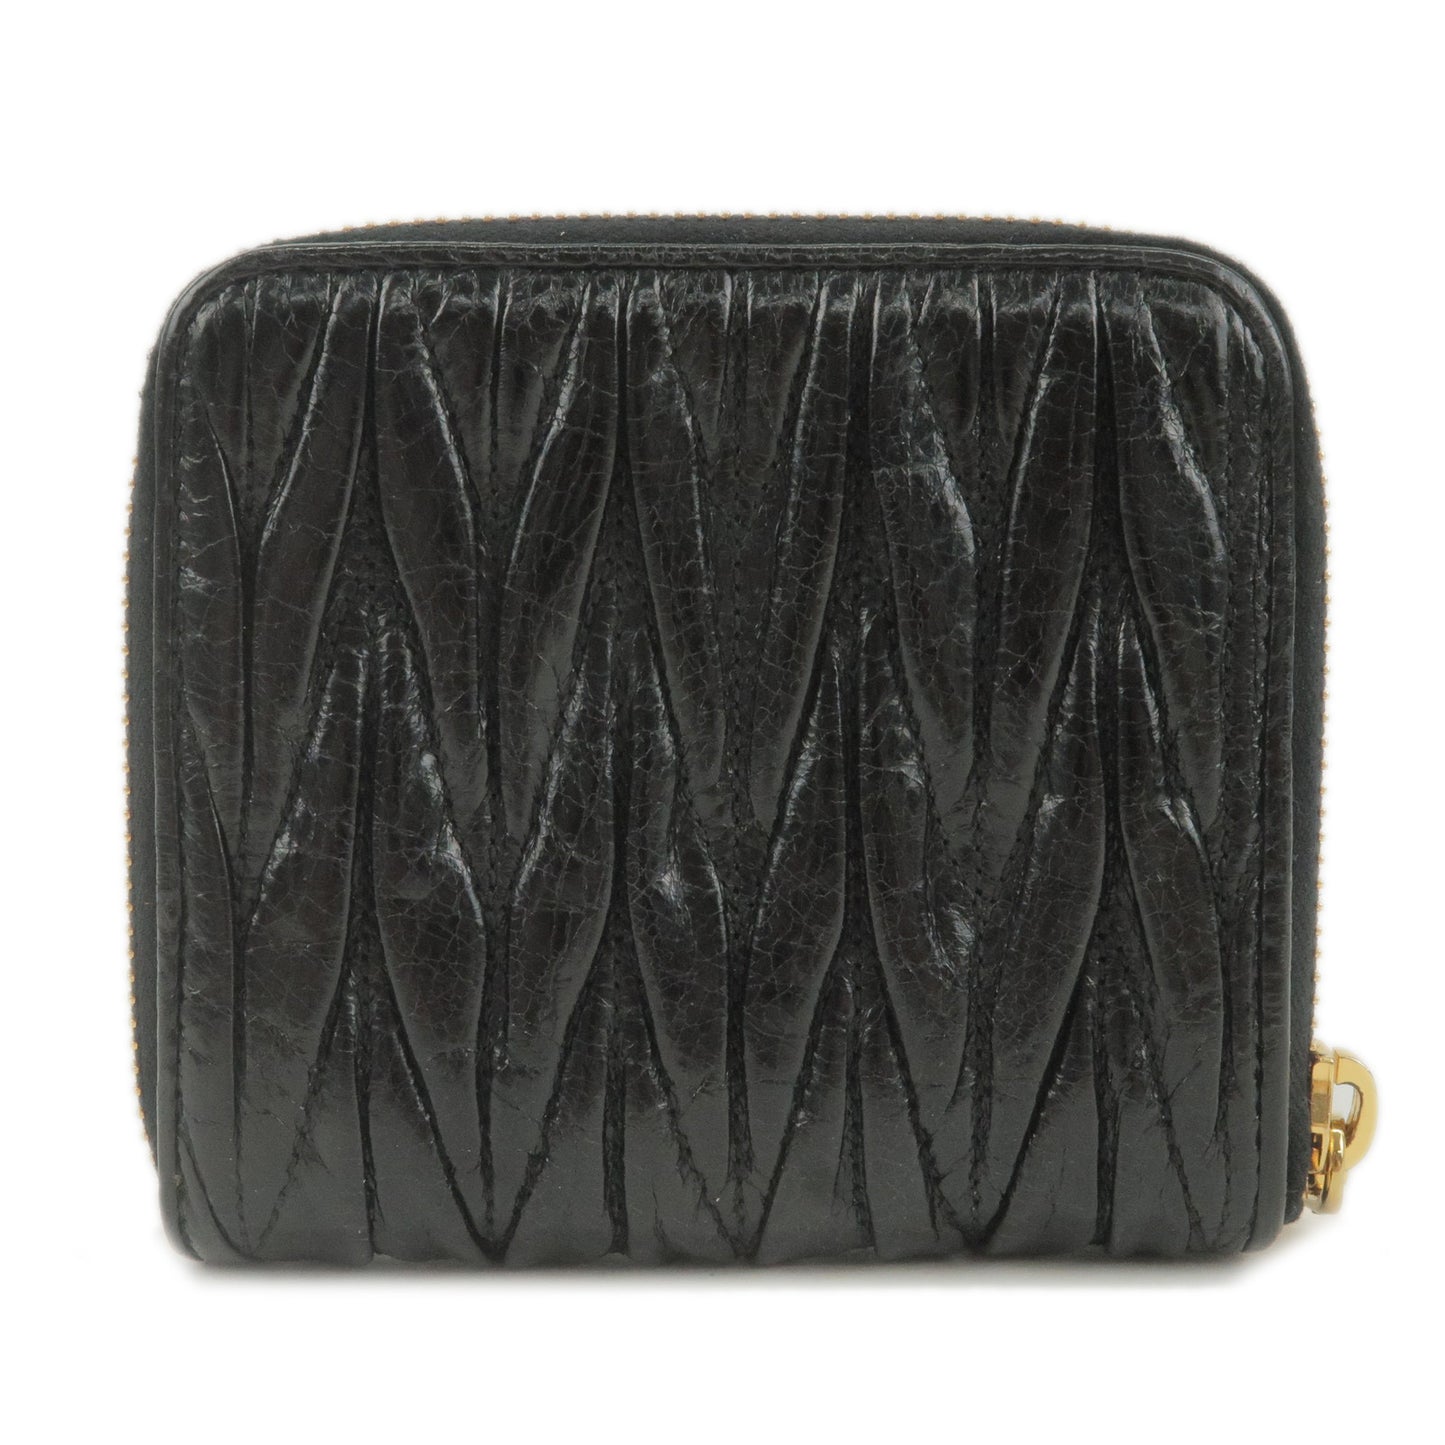 MIU MIU Matelasse Leather Compact Bi-Fold Wallet Black 5M0522